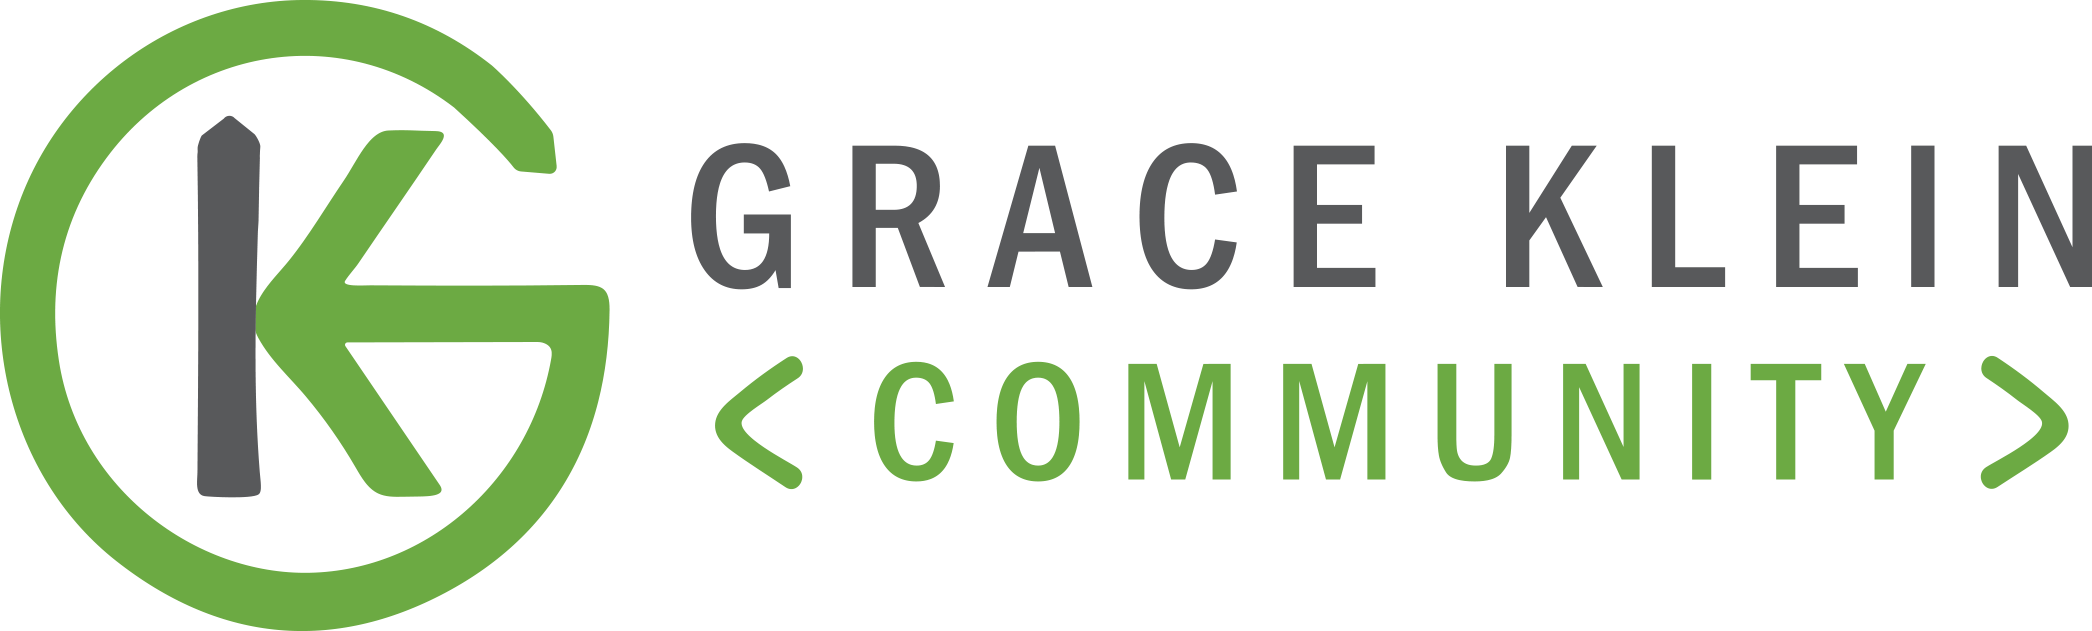 Grace Klein Community logo